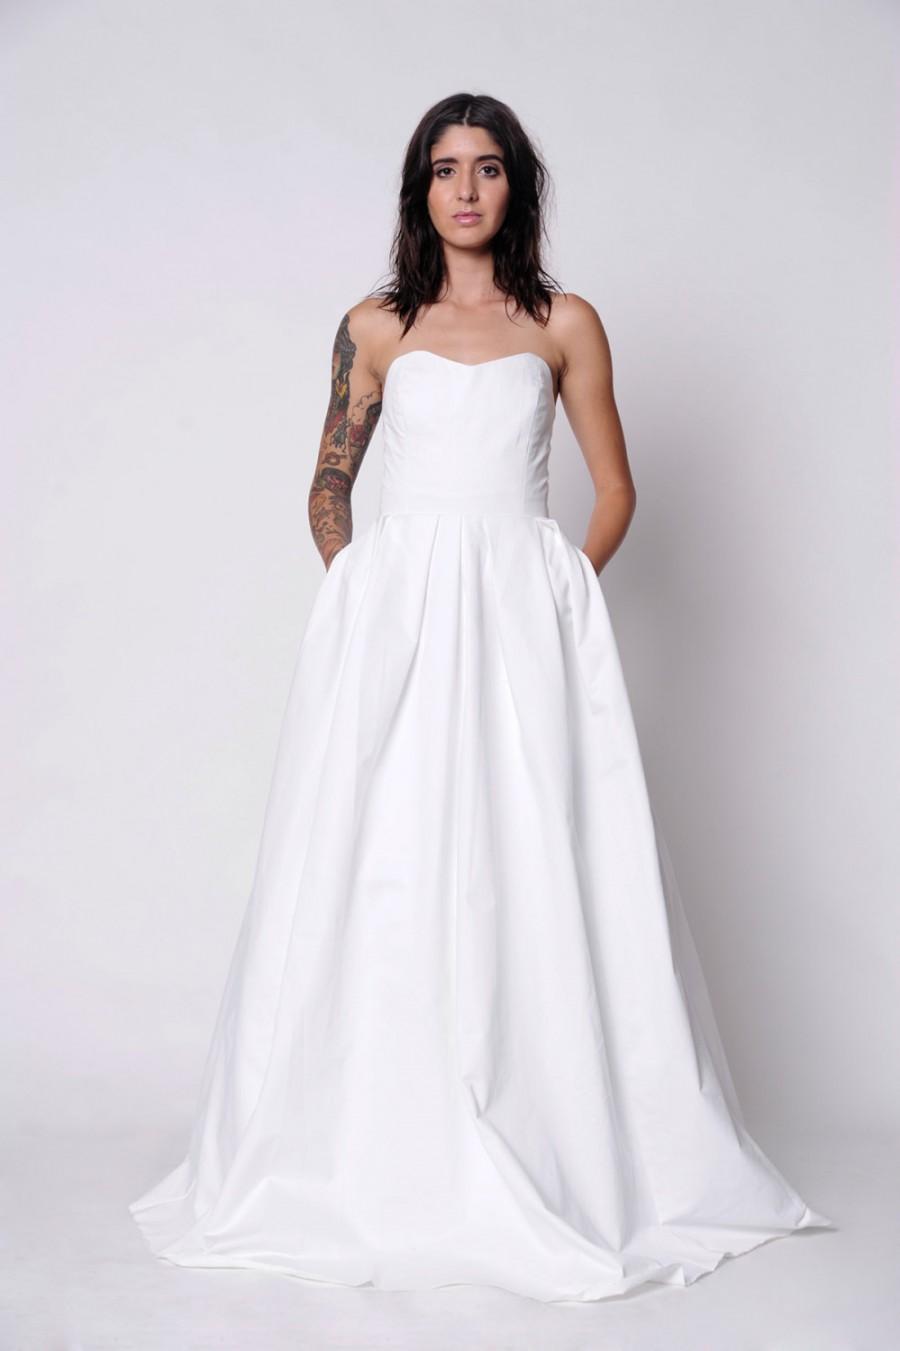 زفاف - Wedding Gown with Pockets. Midnight Skies Wedding Gown. Strapless Gown with Pleated Skirt and Button Detail. Custom Made to Order.